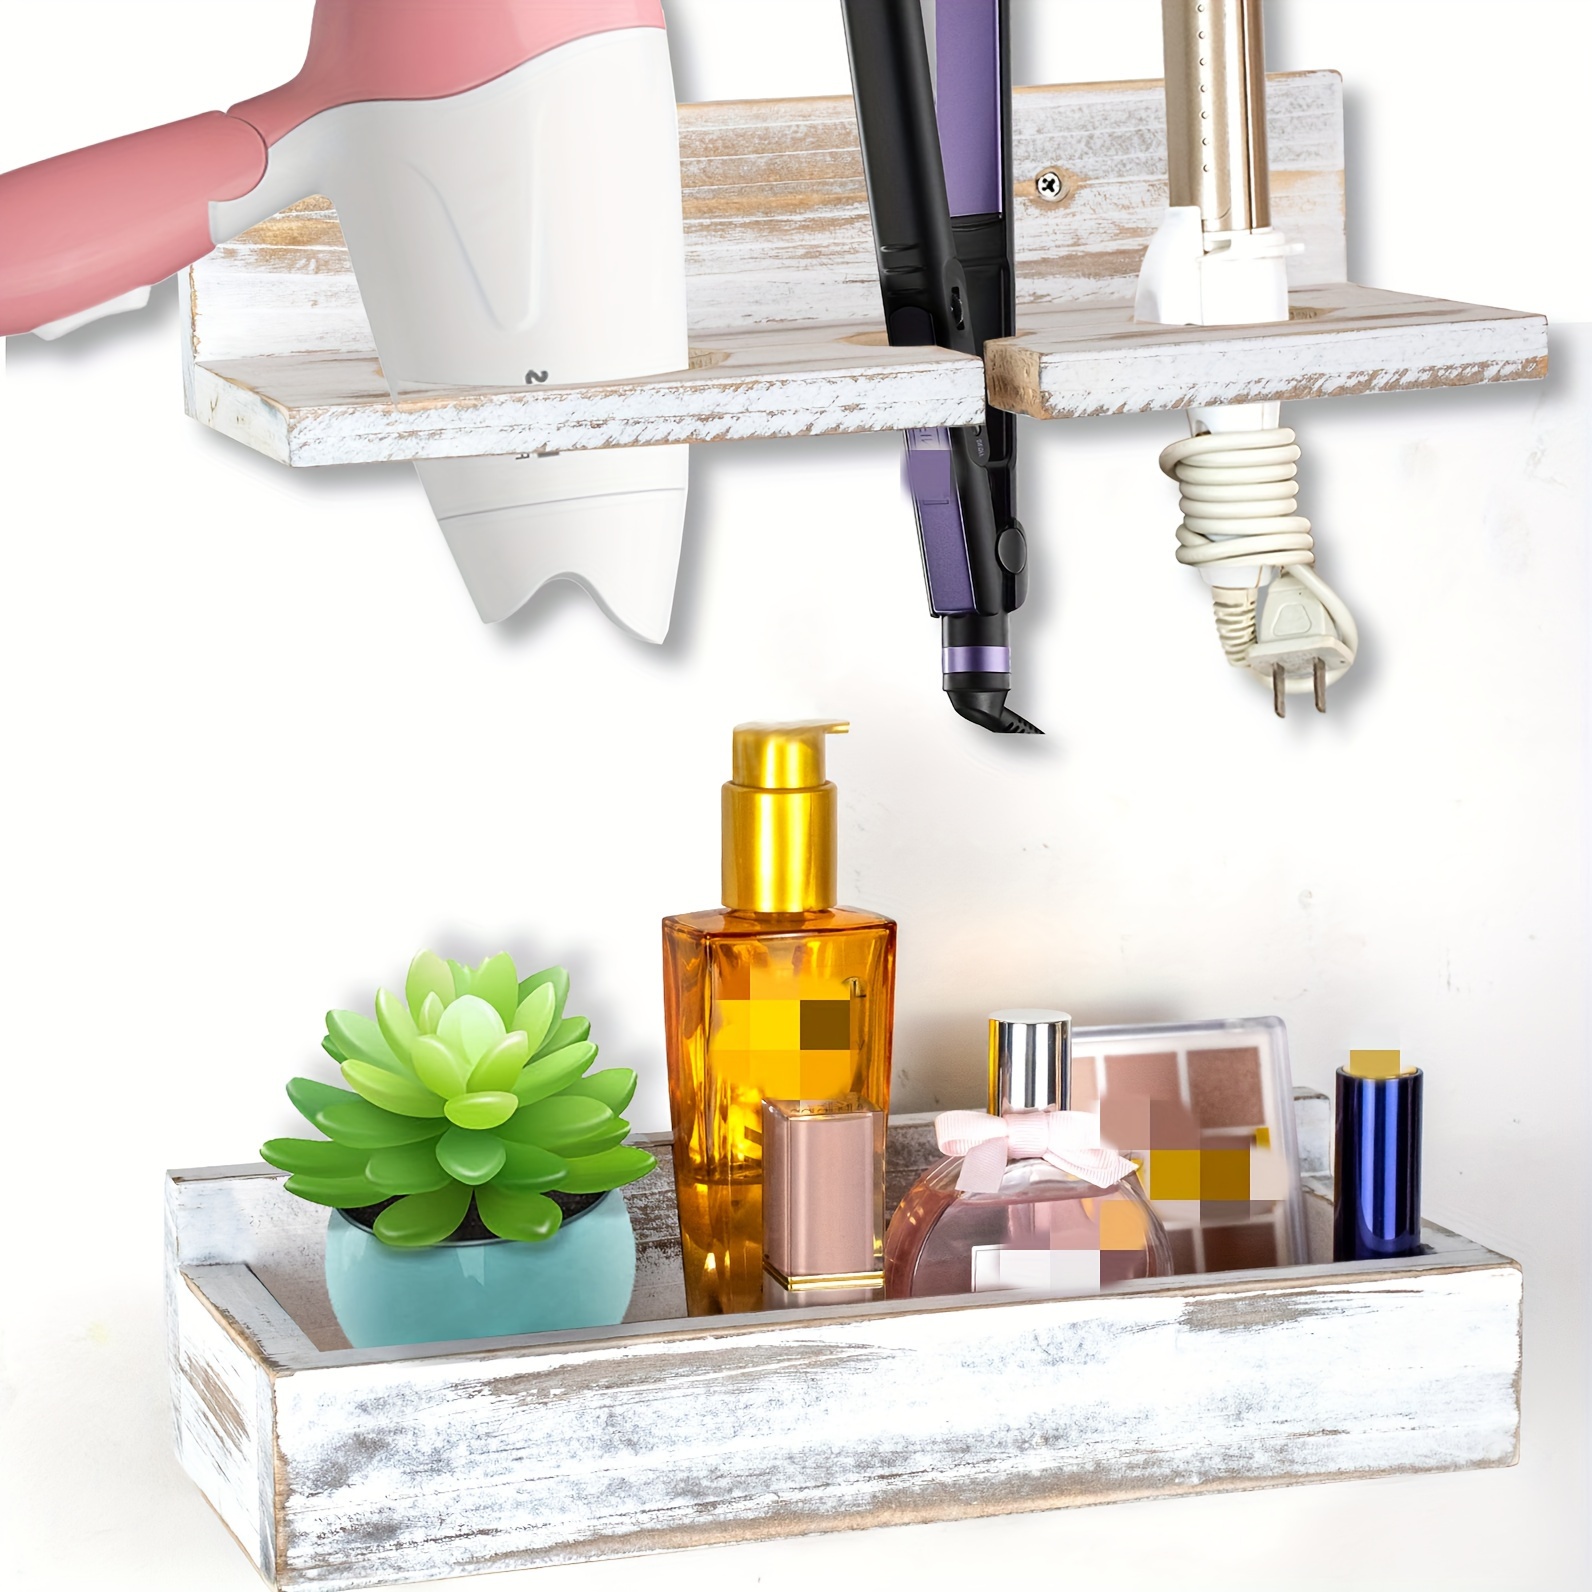 Spiretro Hair Tools Organizer - Wood Tan - Blow Dryer, Straightener,  Curling Wand, Brushes Holder - Vanity & Bathroom Storage - Wall Mount or  Sit on